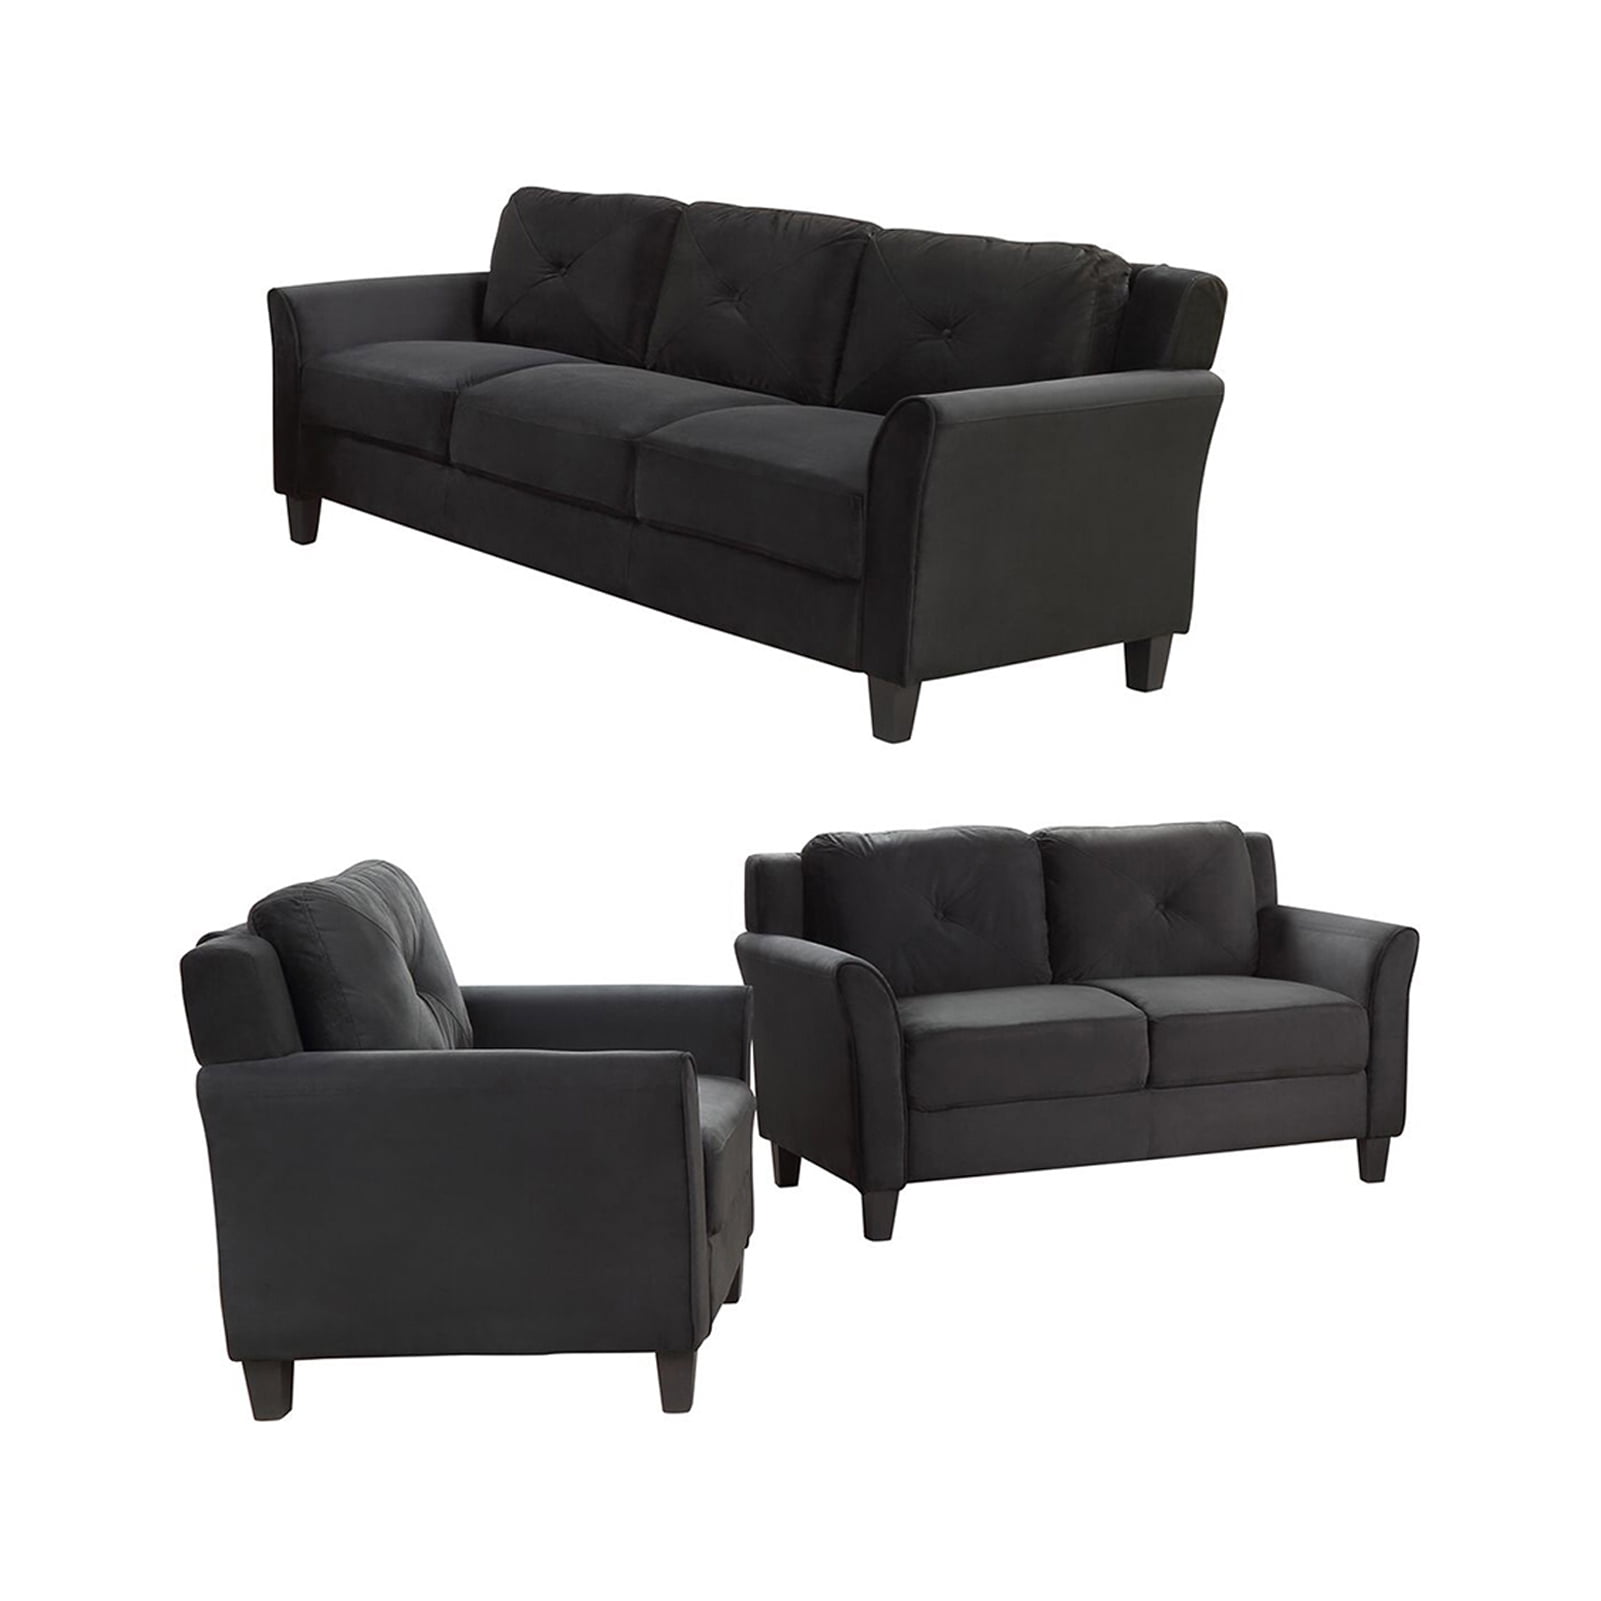 Tenozek Double Sided Micro Suede Sofa 3-Person Seat Cushion Beige/Chocolate 